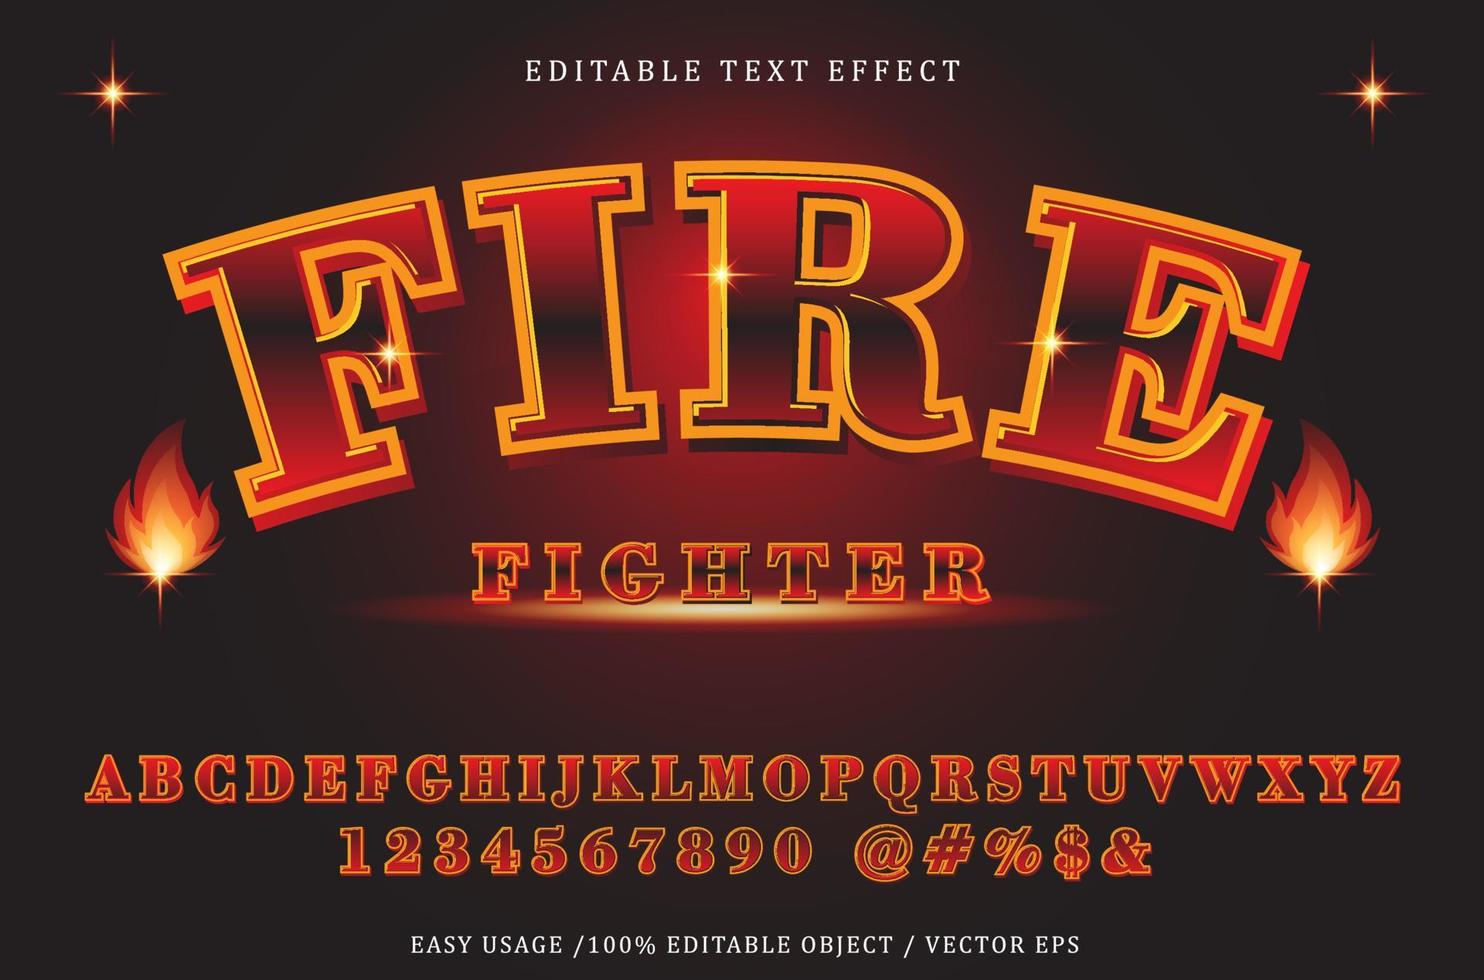 Fire fighter text effect vector